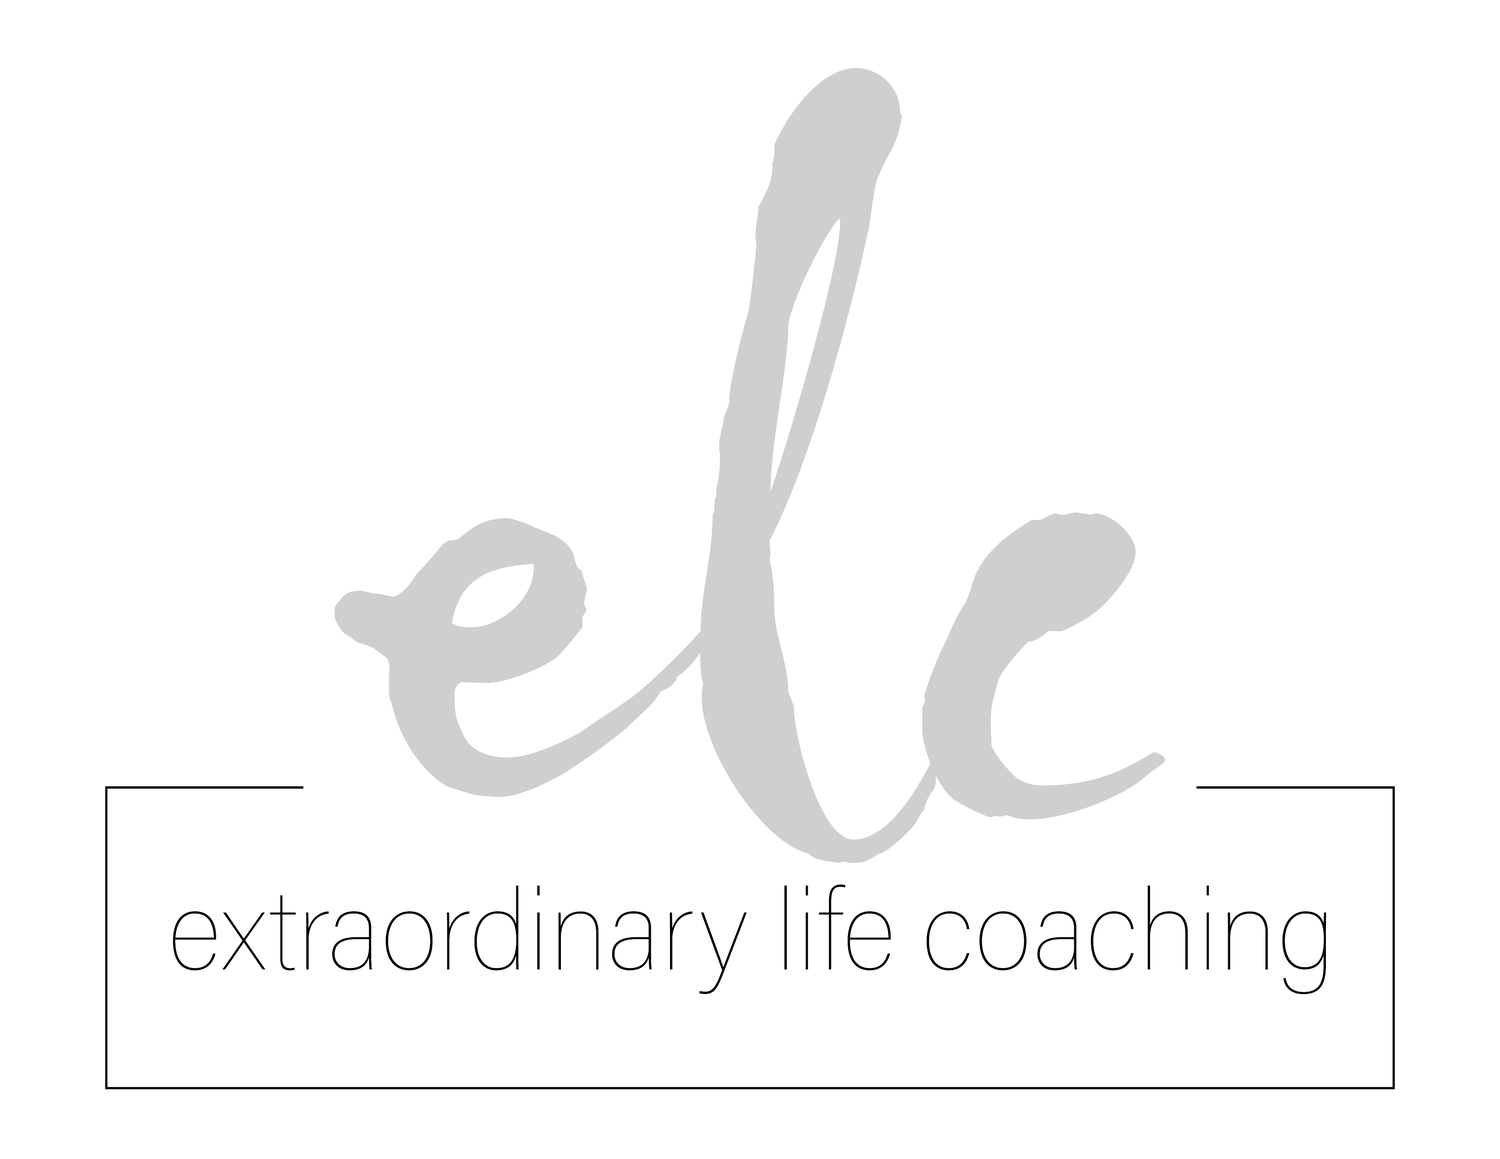 Extraordinary Life Coaching